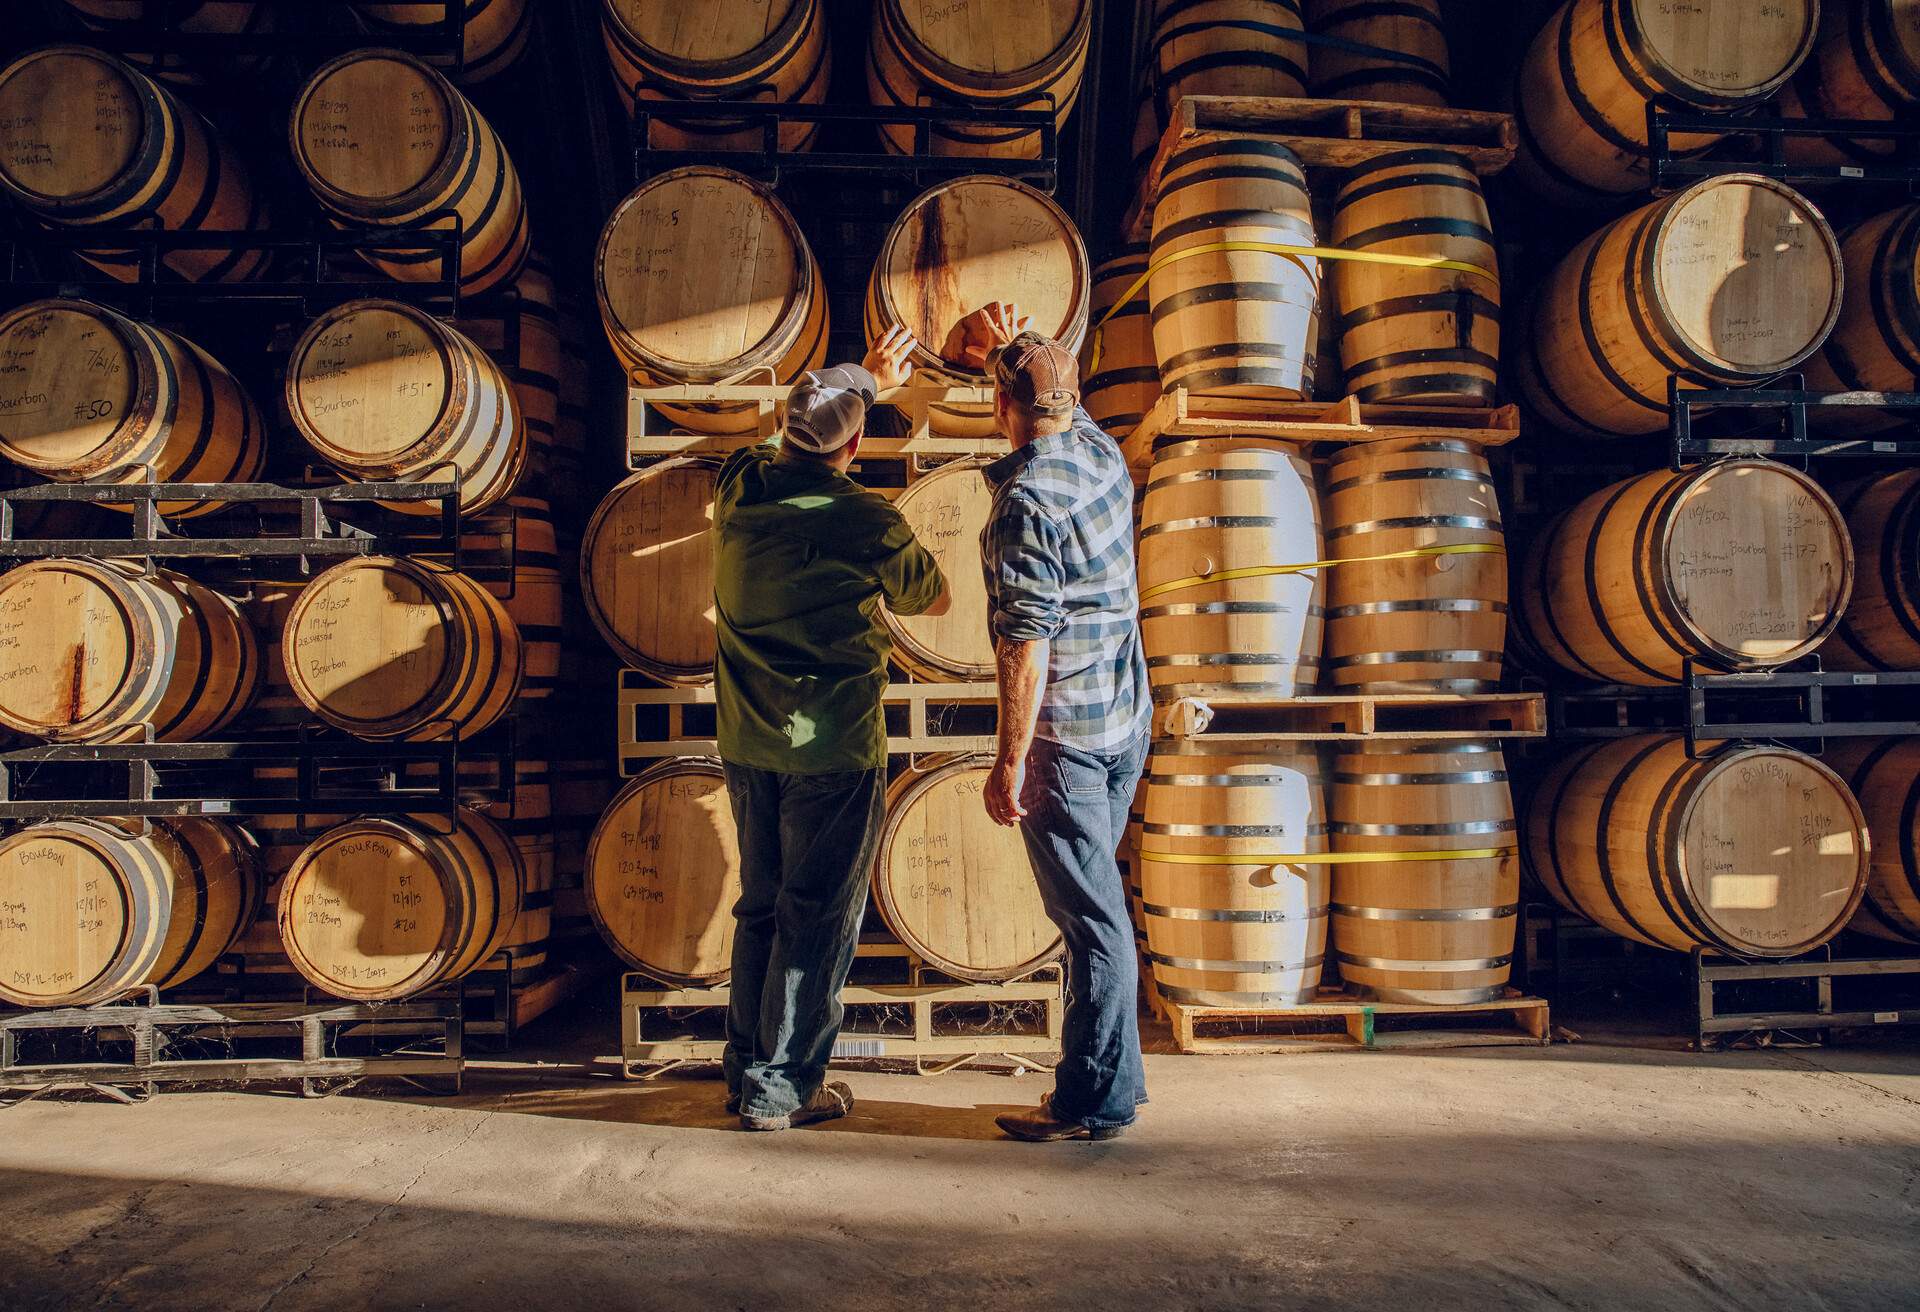 Two men looking at wooden barrels inside a distillery.